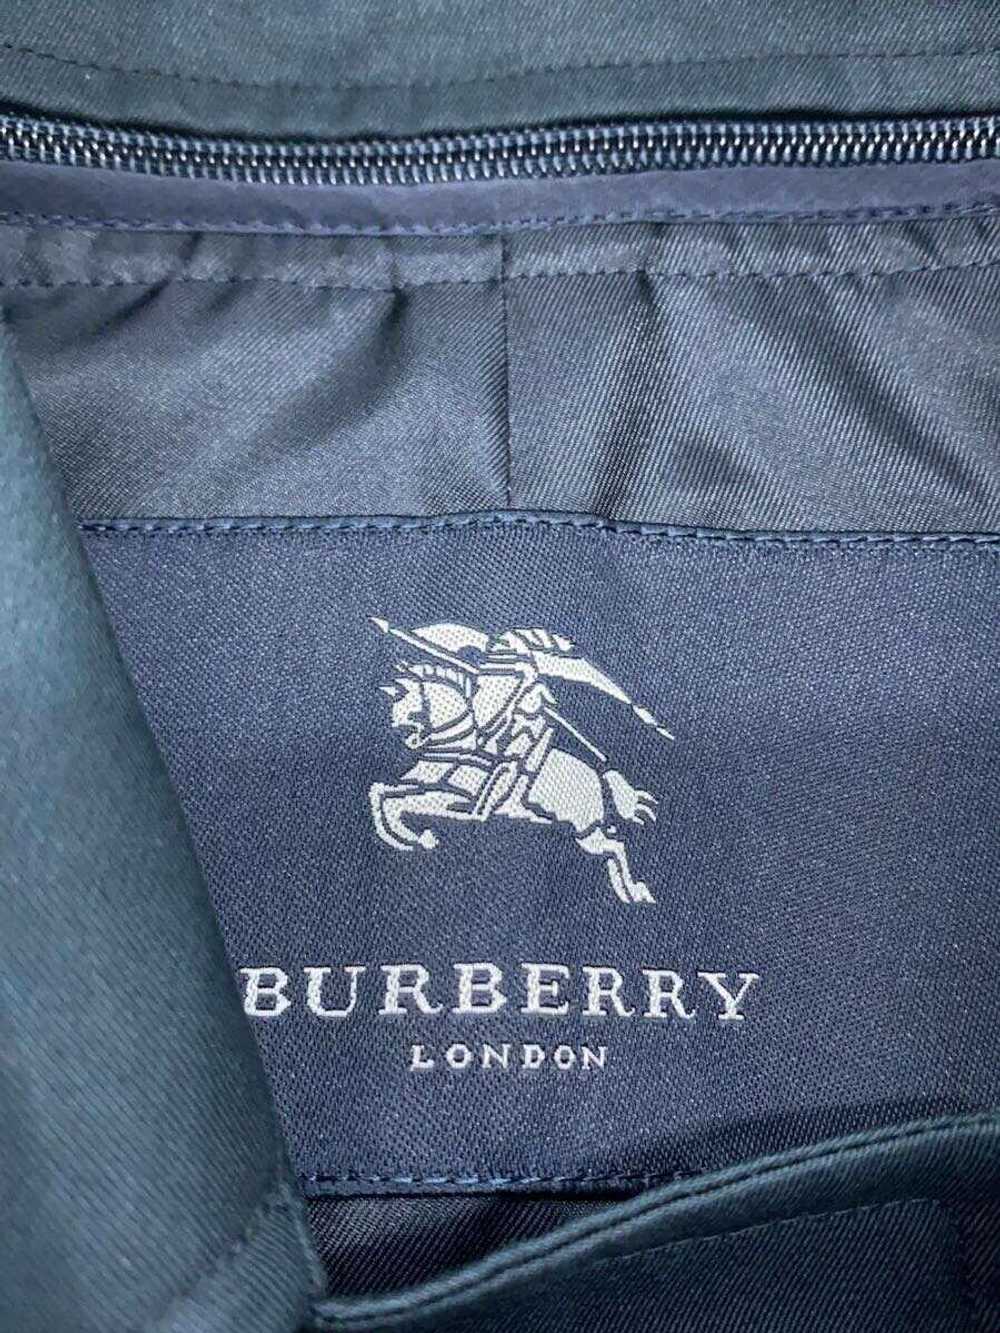 Burberry  London Stainless Steel Collar Coat/Tren… - image 3